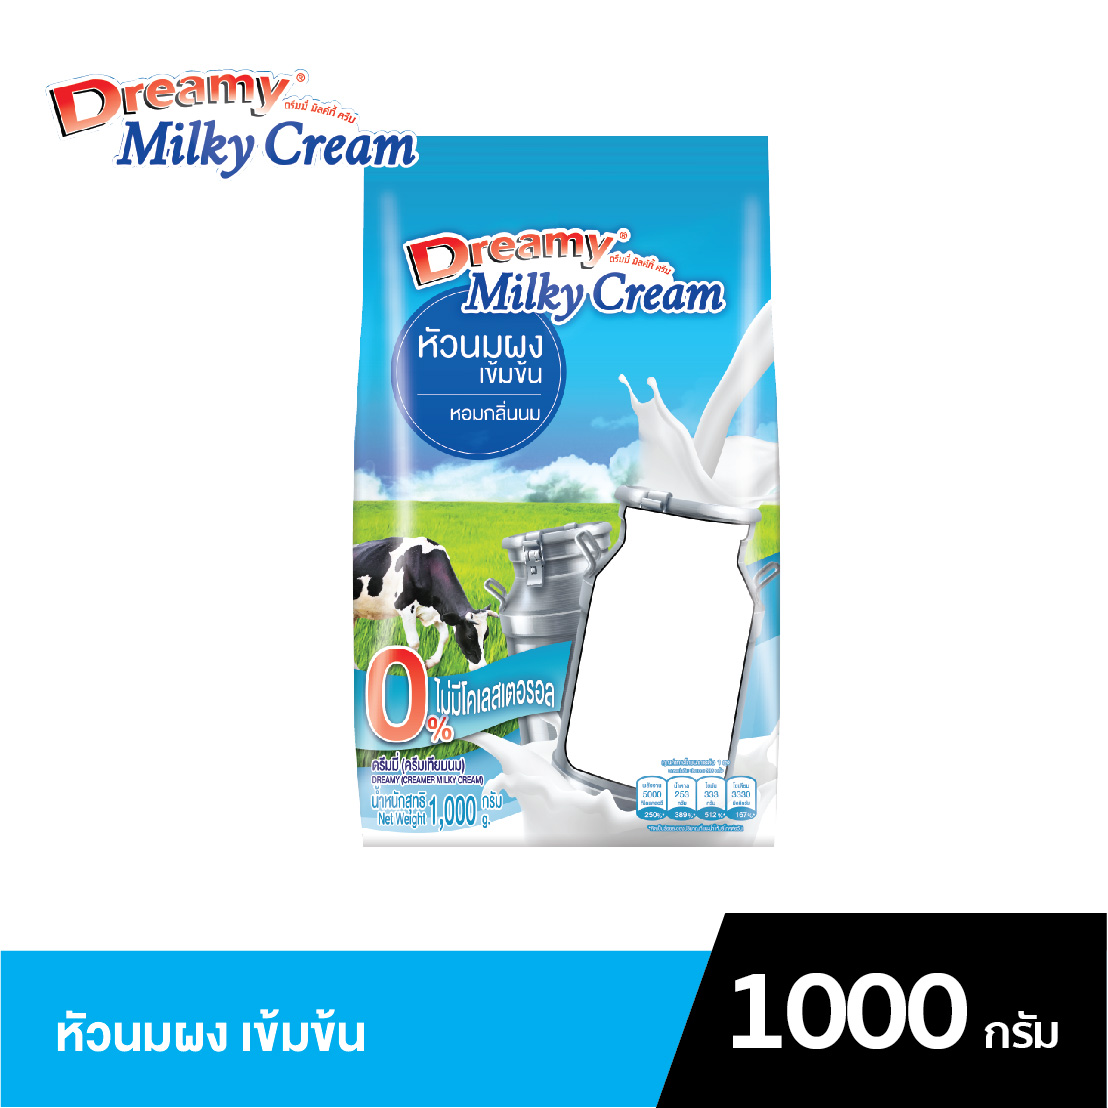 Dreamy Milky Cream (ครีมเทียมนม เข้มข้น) ขนาด 1,000 กรัม